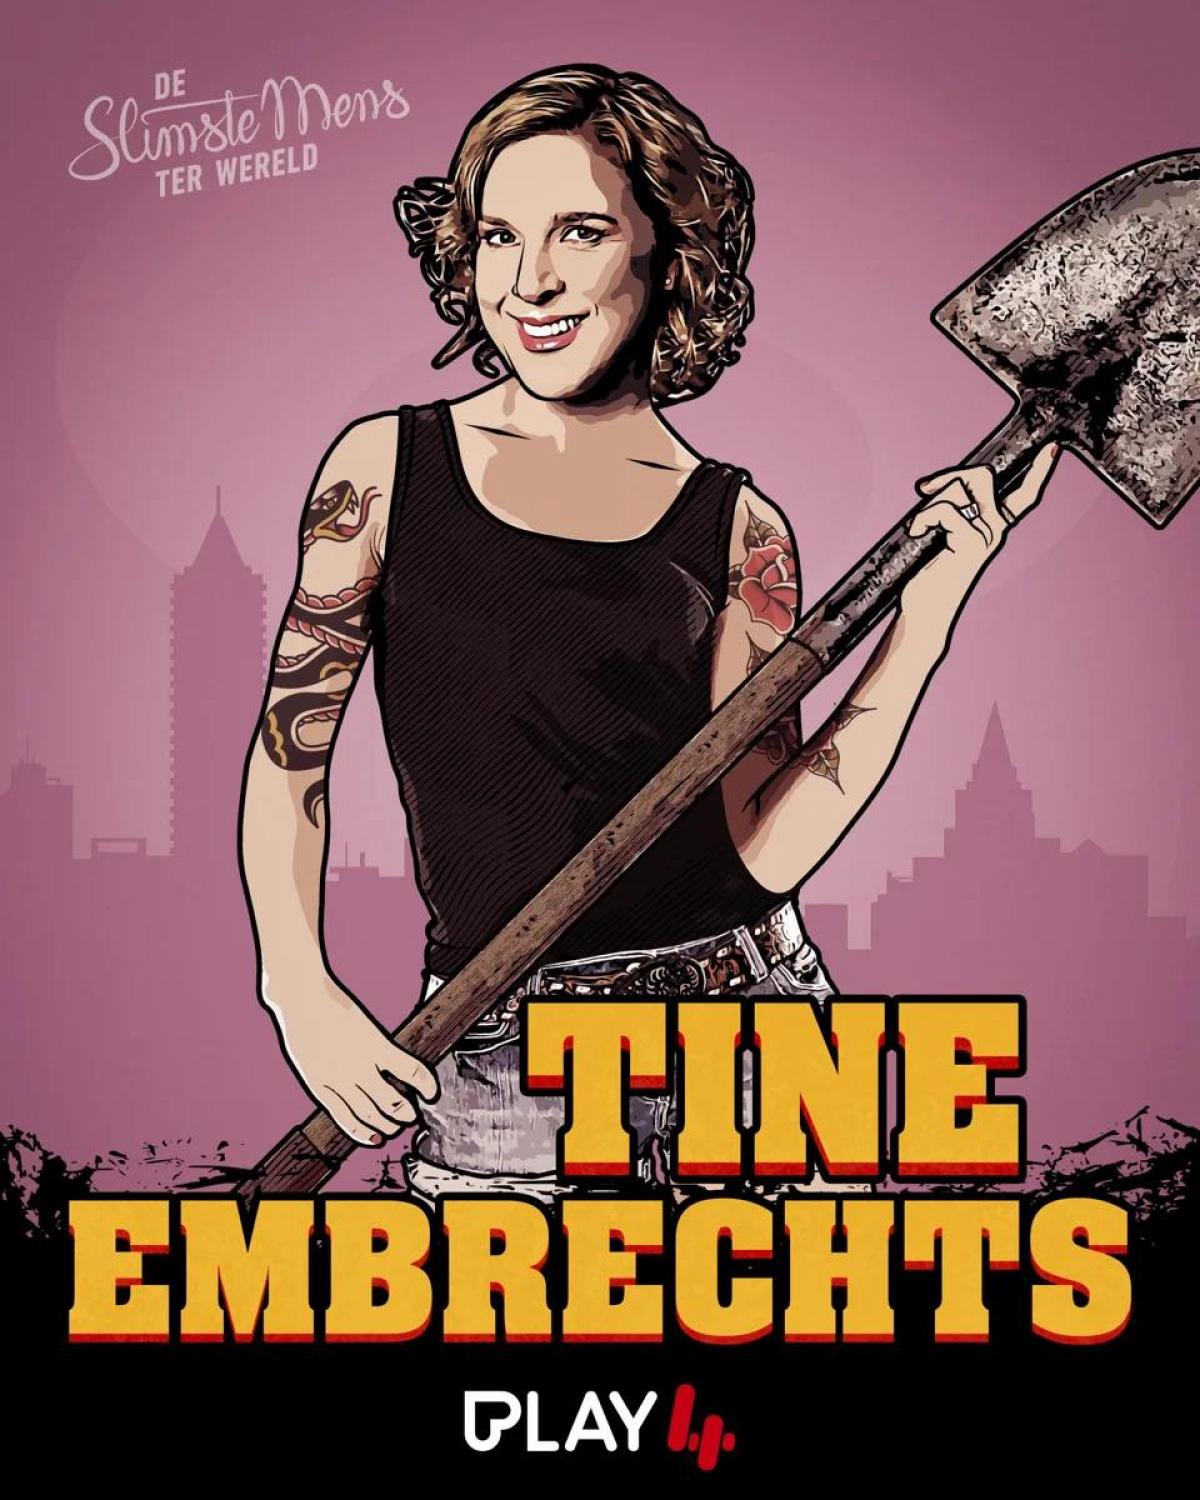 Actrice Tine Embrechts